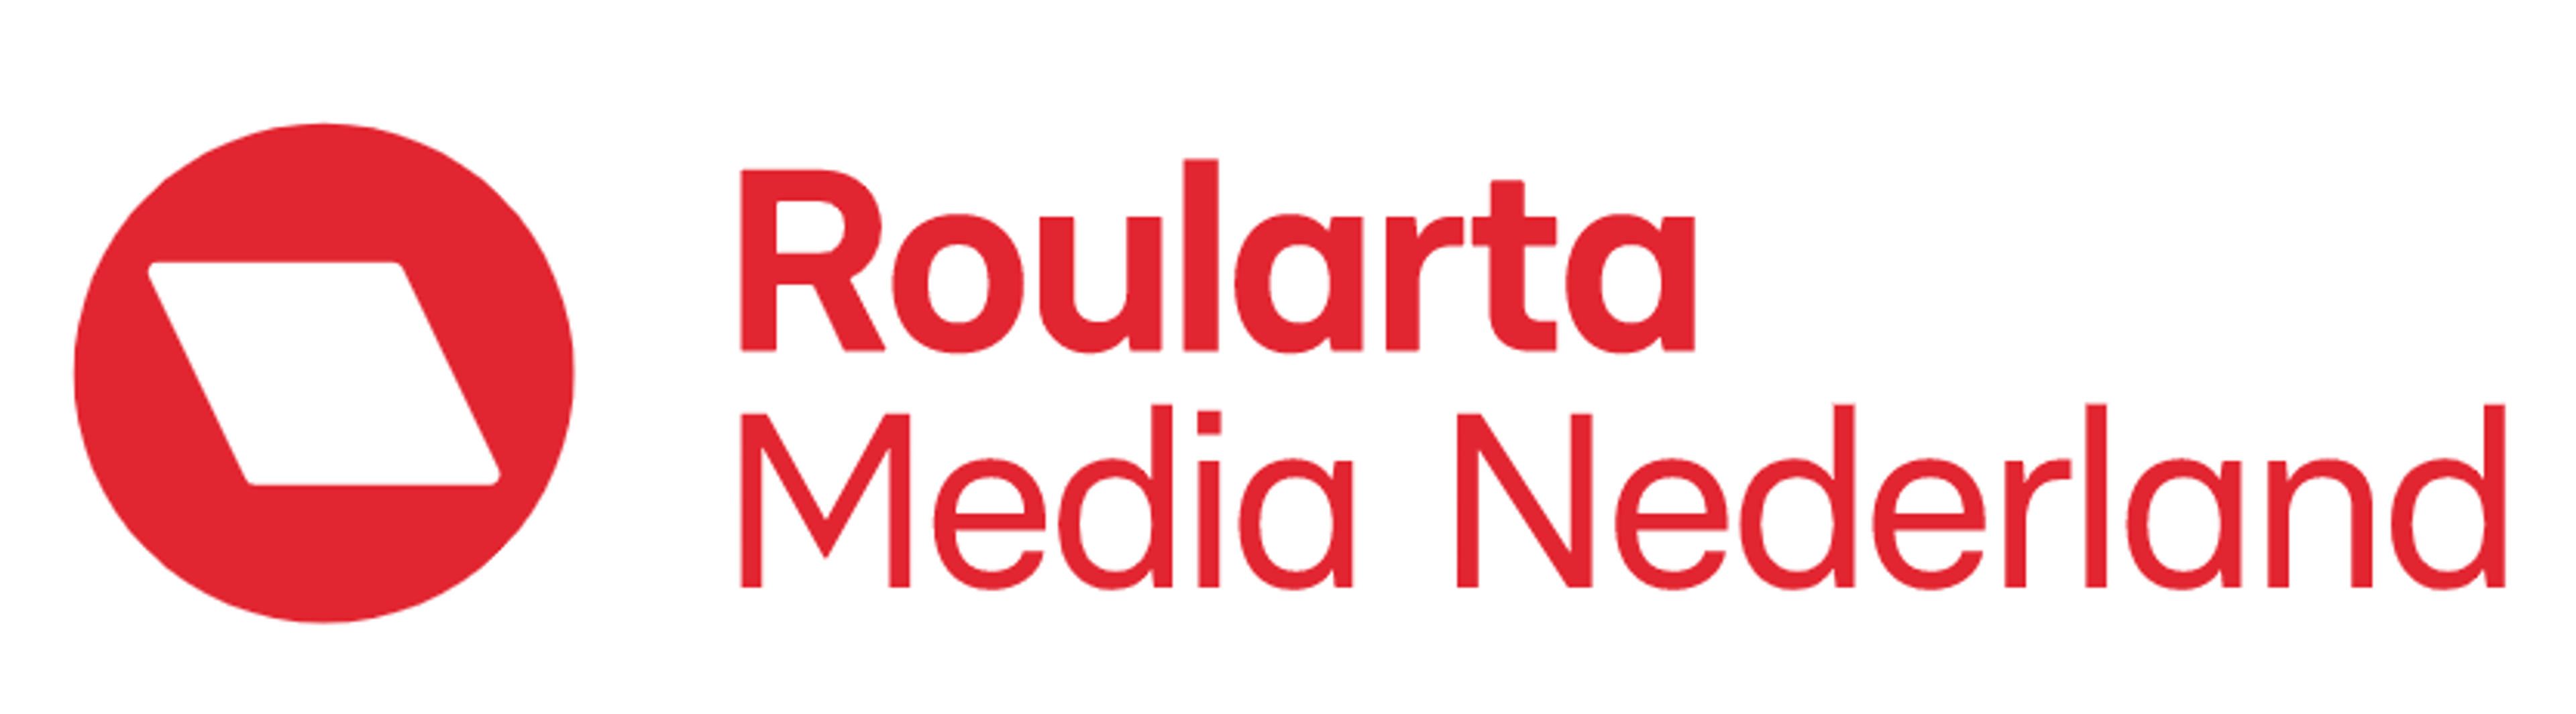 MediaPlus BV opgegaan in Roularta Media Nederland BV